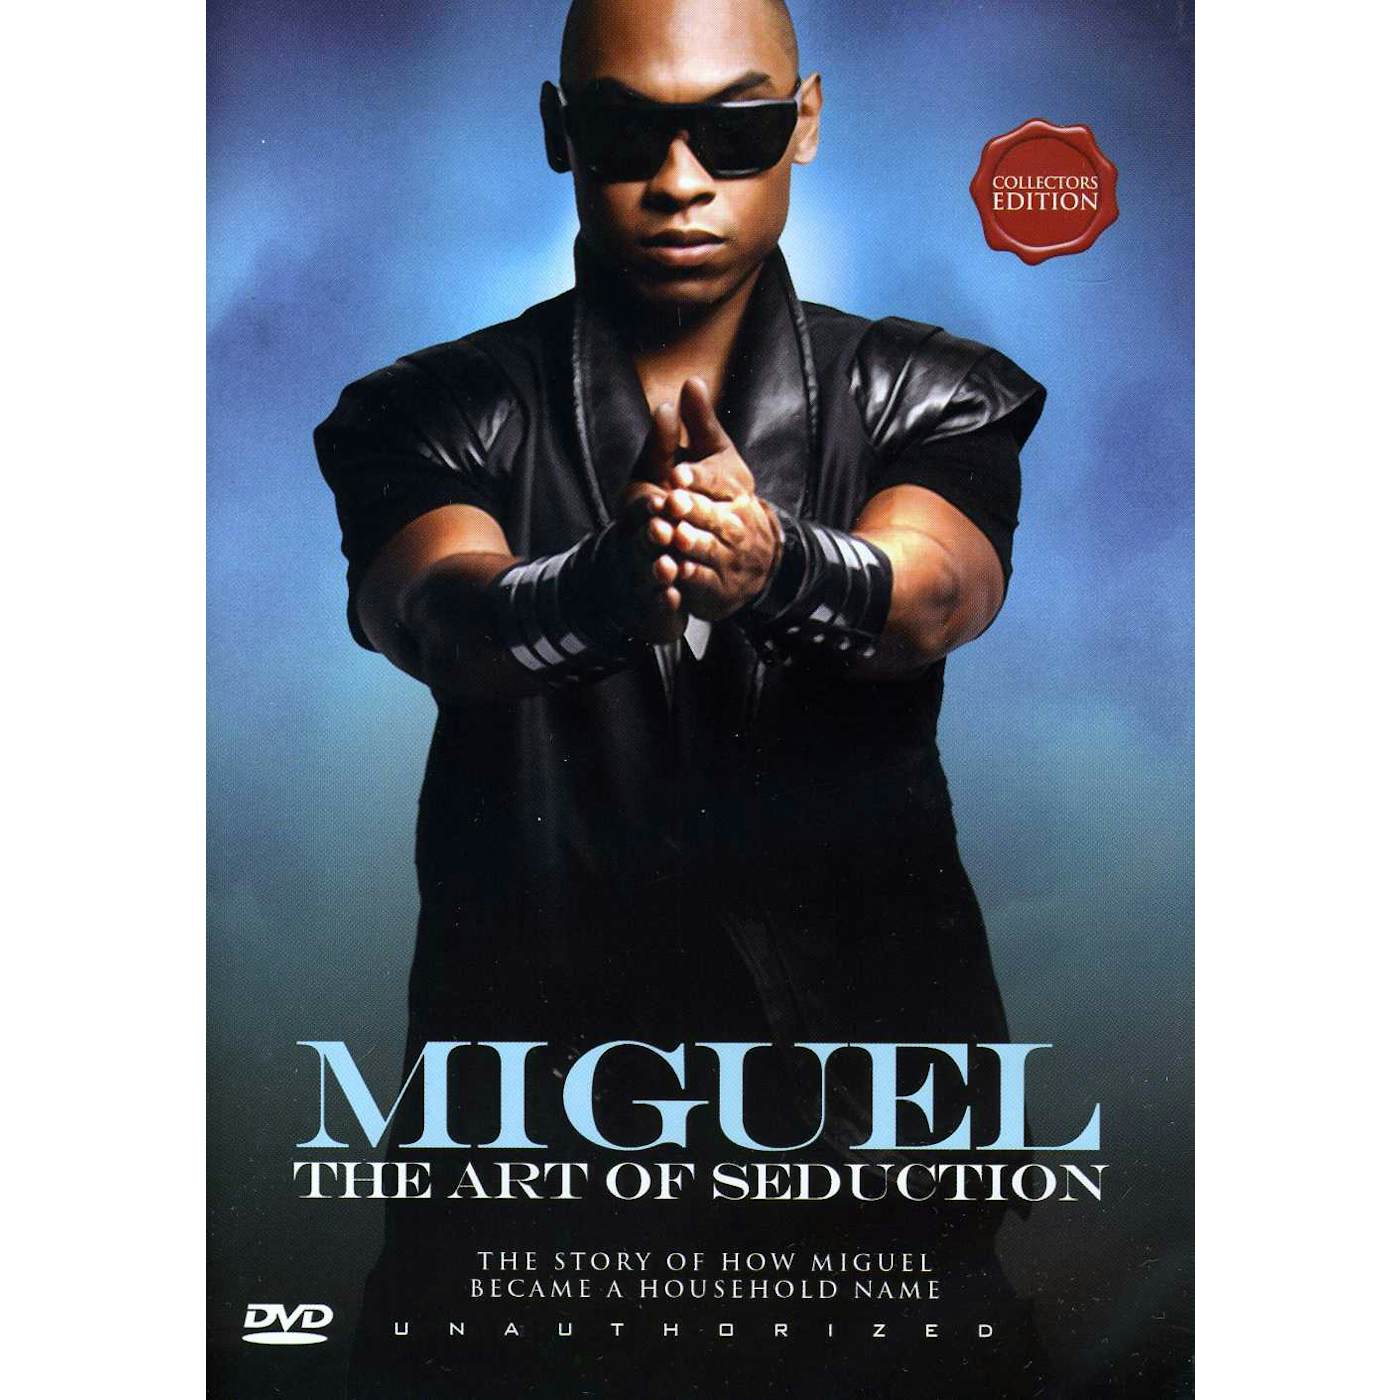 Miguel ART OF SEDUCTION DVD